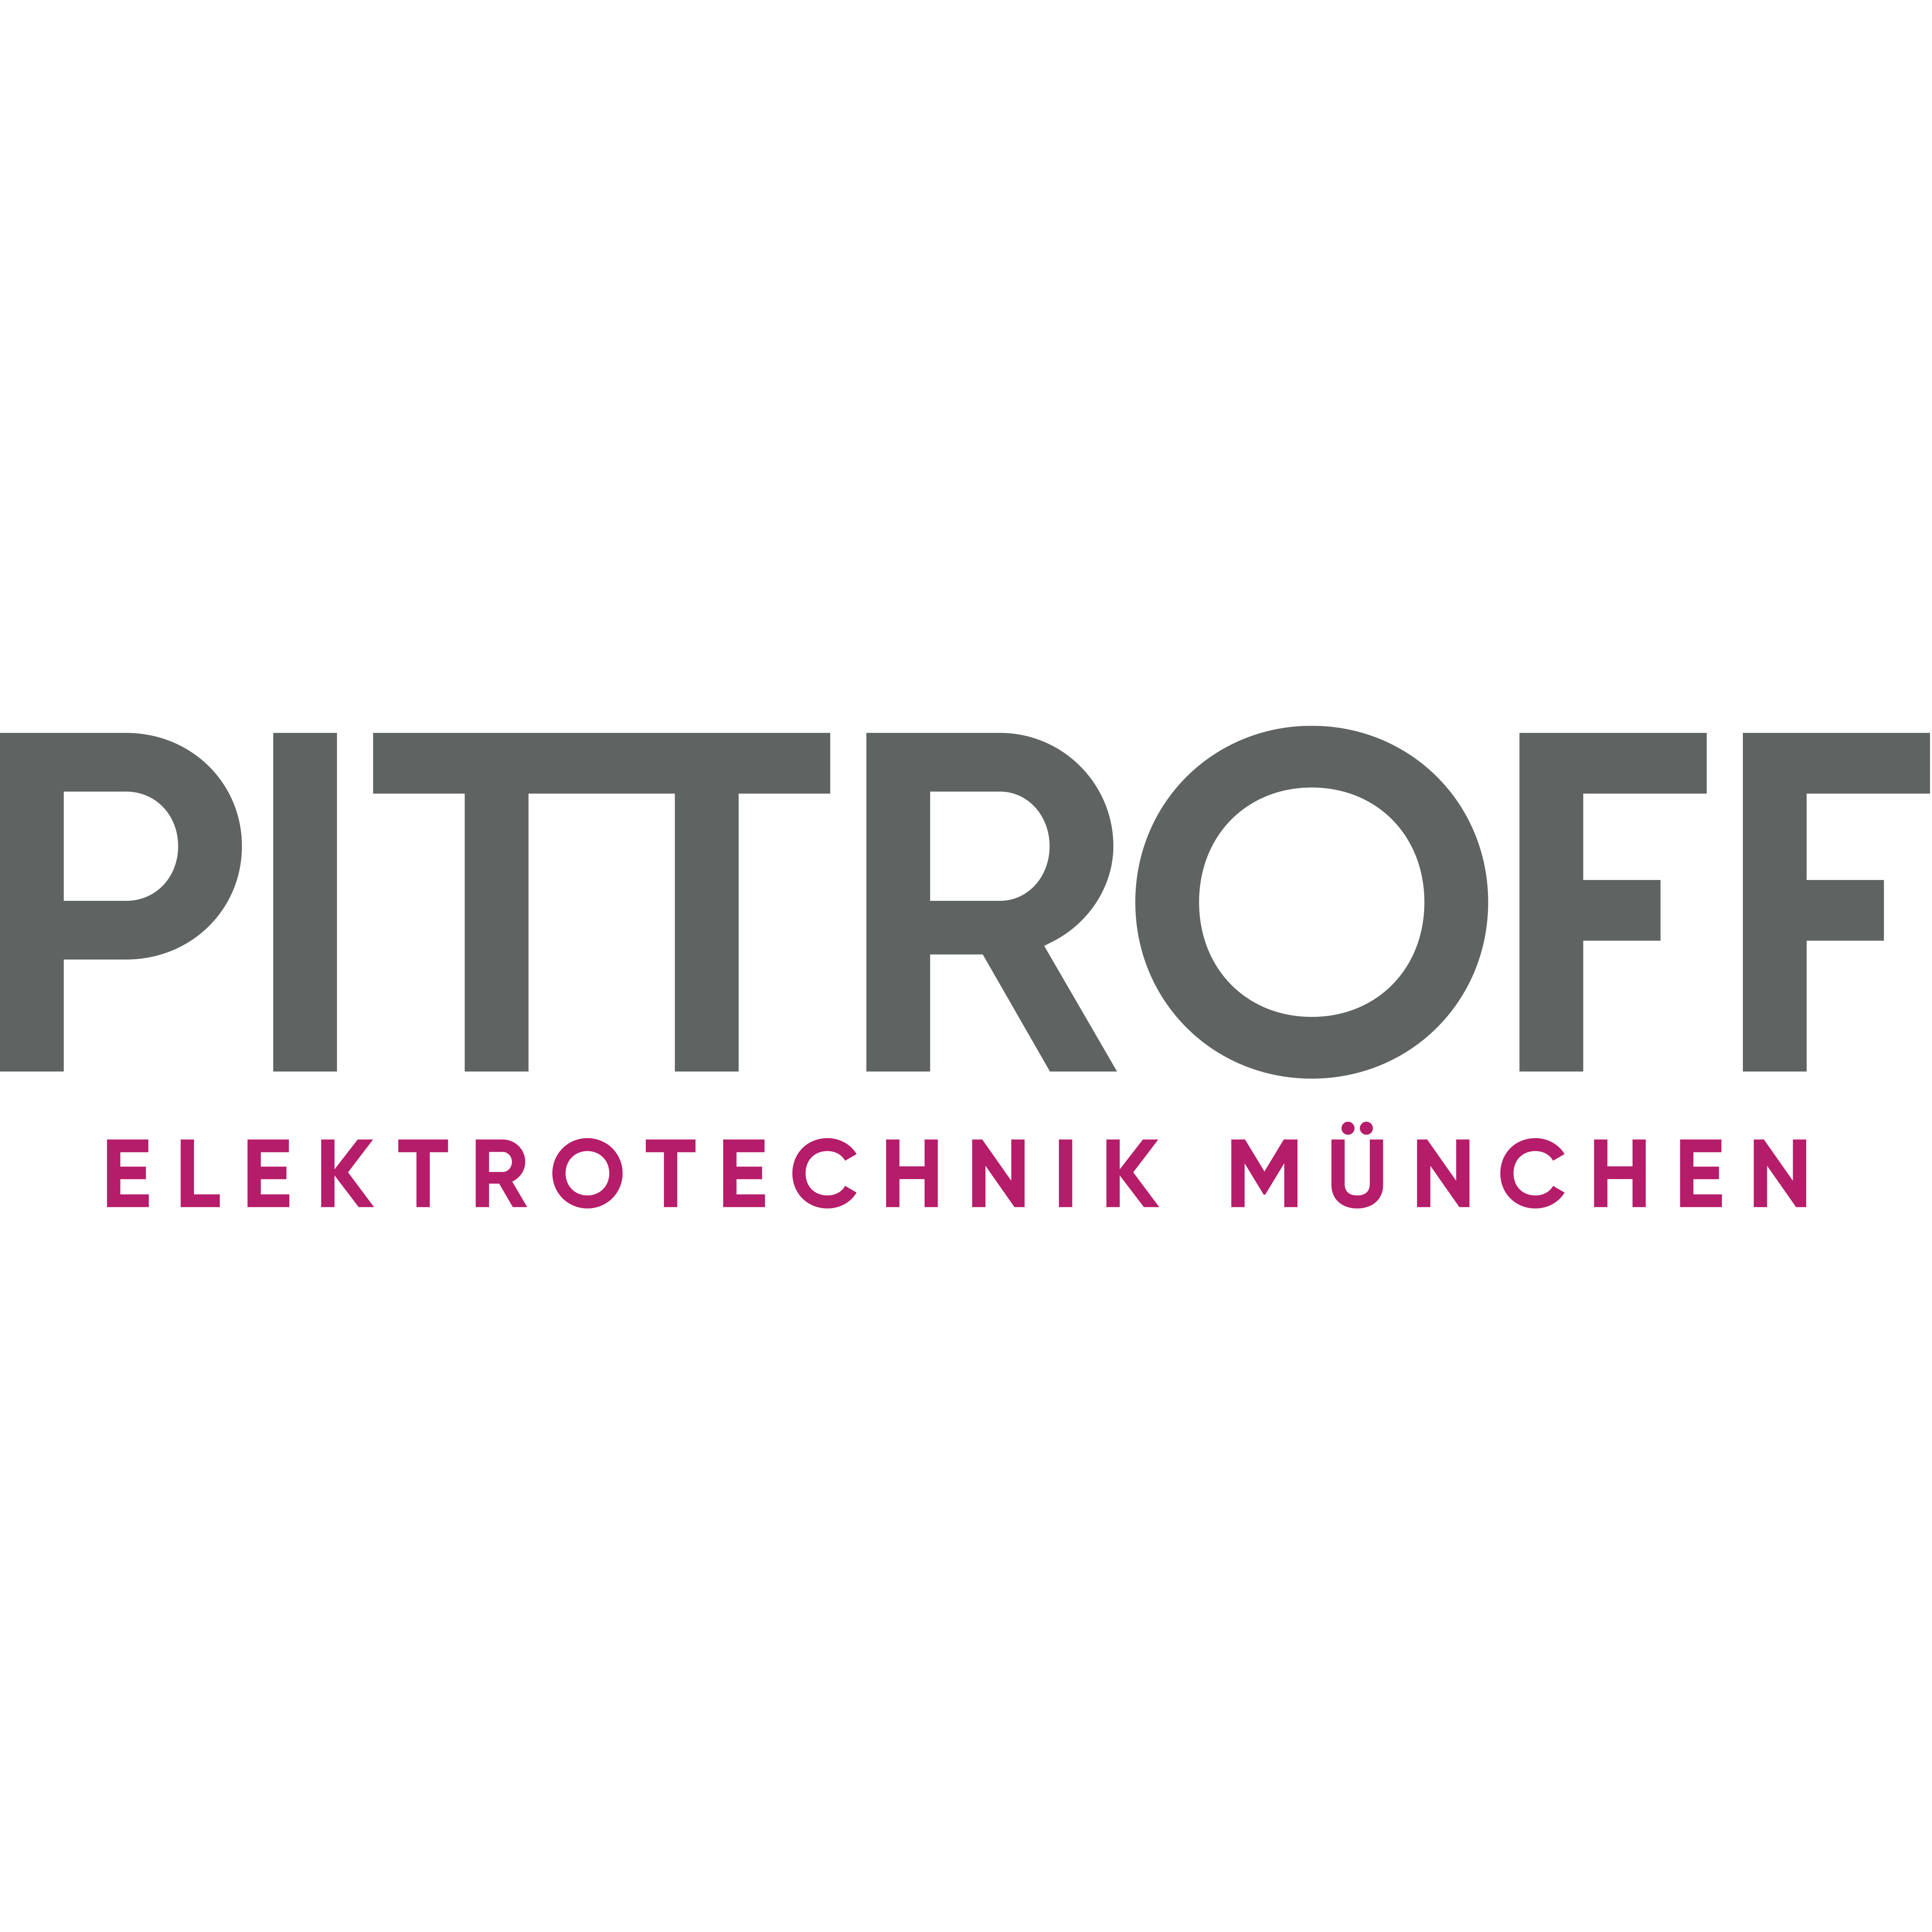 Pittroff Elektrotechnik München GmbH - Electrician - München - 089 9901880 Germany | ShowMeLocal.com